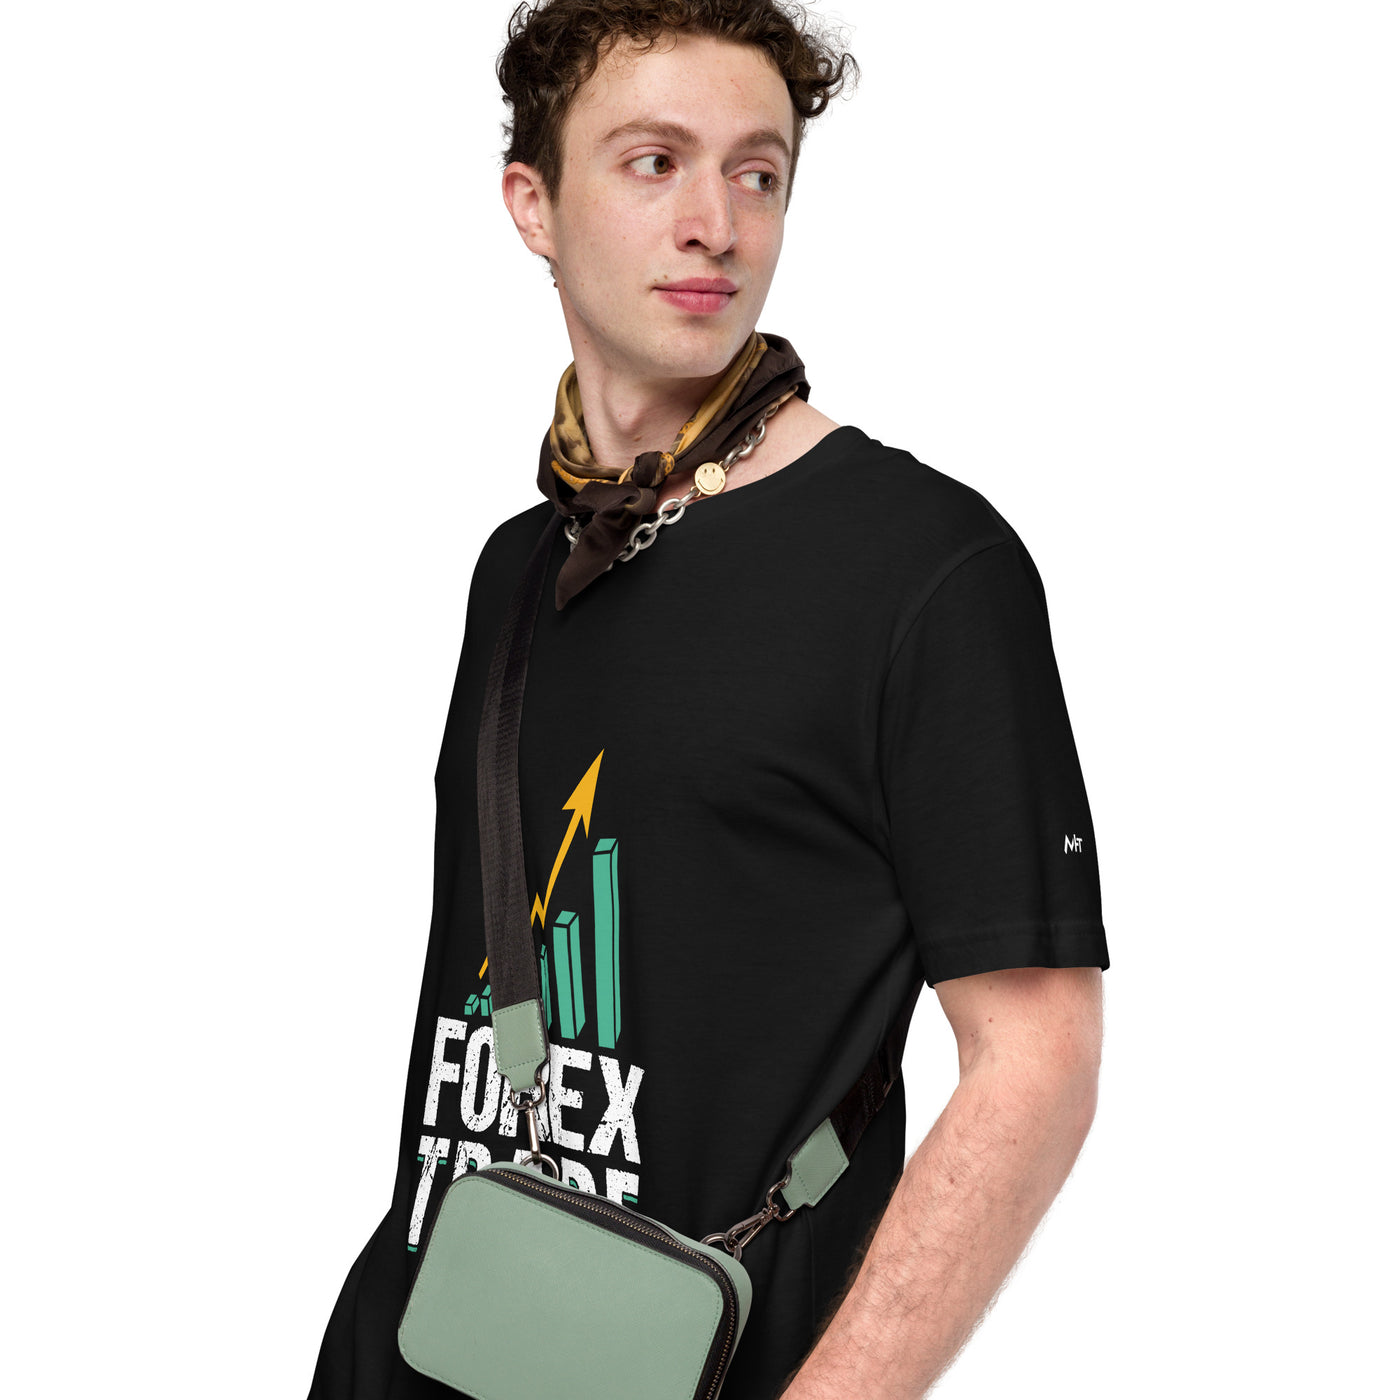 Forex Trading - Unisex t-shirt